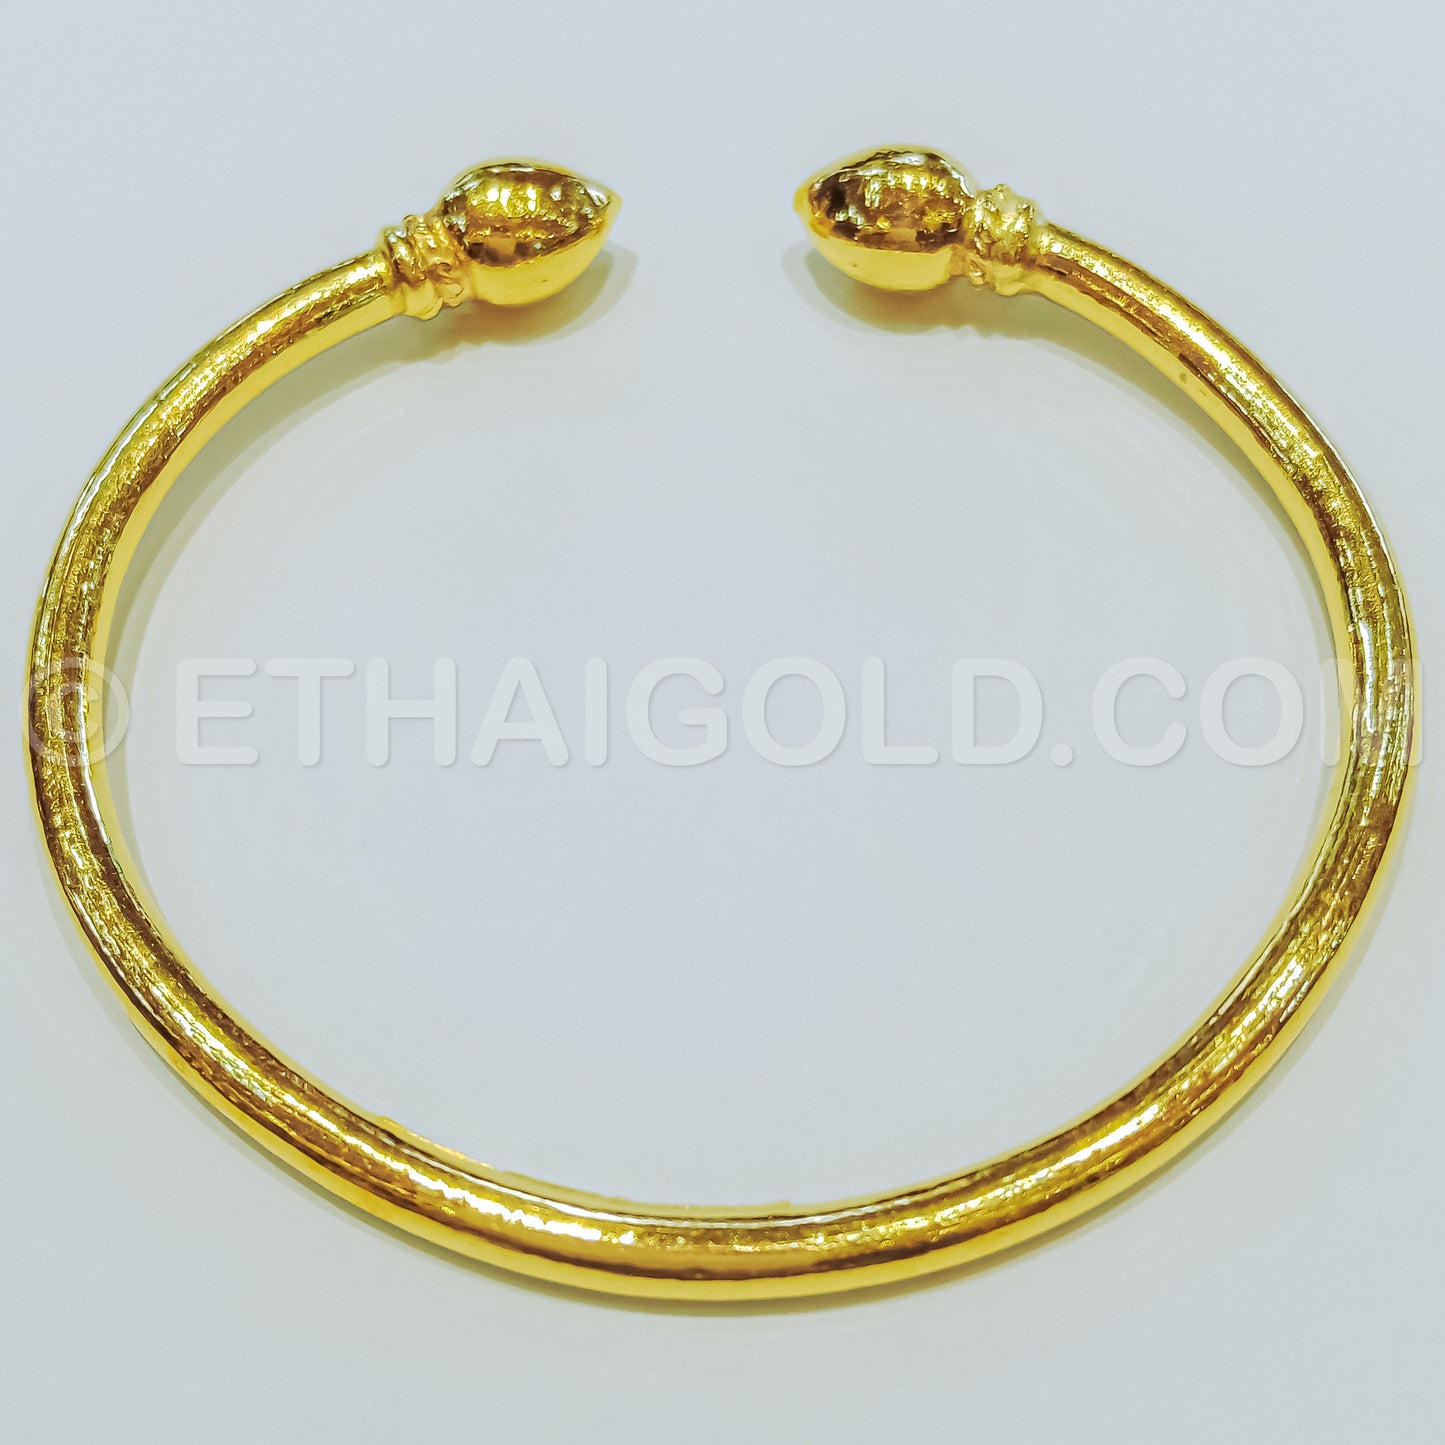 Woman's hand holding thai gold bracelet design. | CanStock